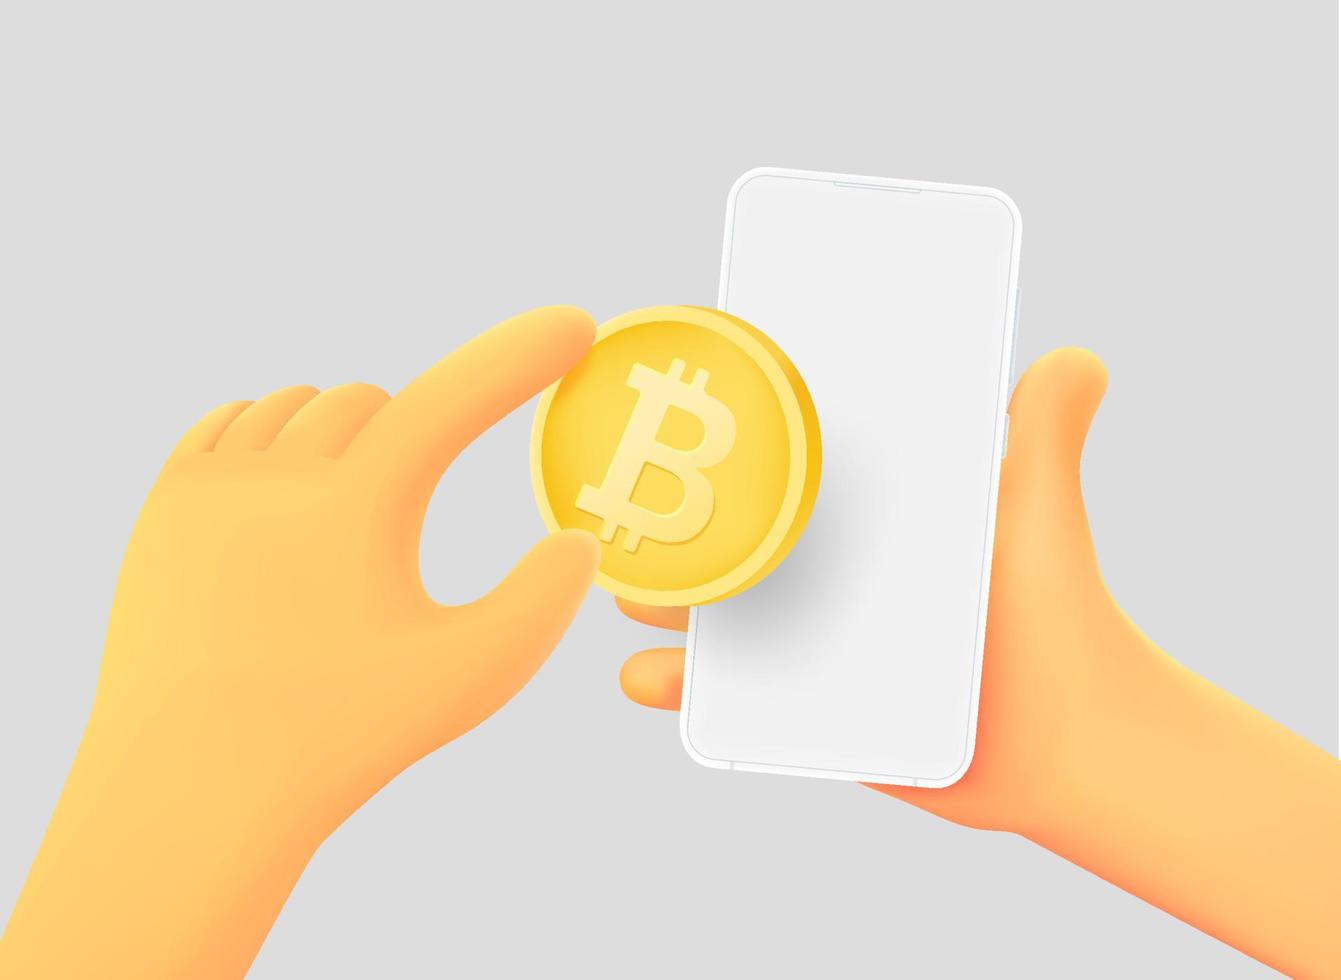 main tenant un smartphone avec bitcoin. extraction de crypto-monnaie via smartphone. illustration vectorielle 3d vecteur